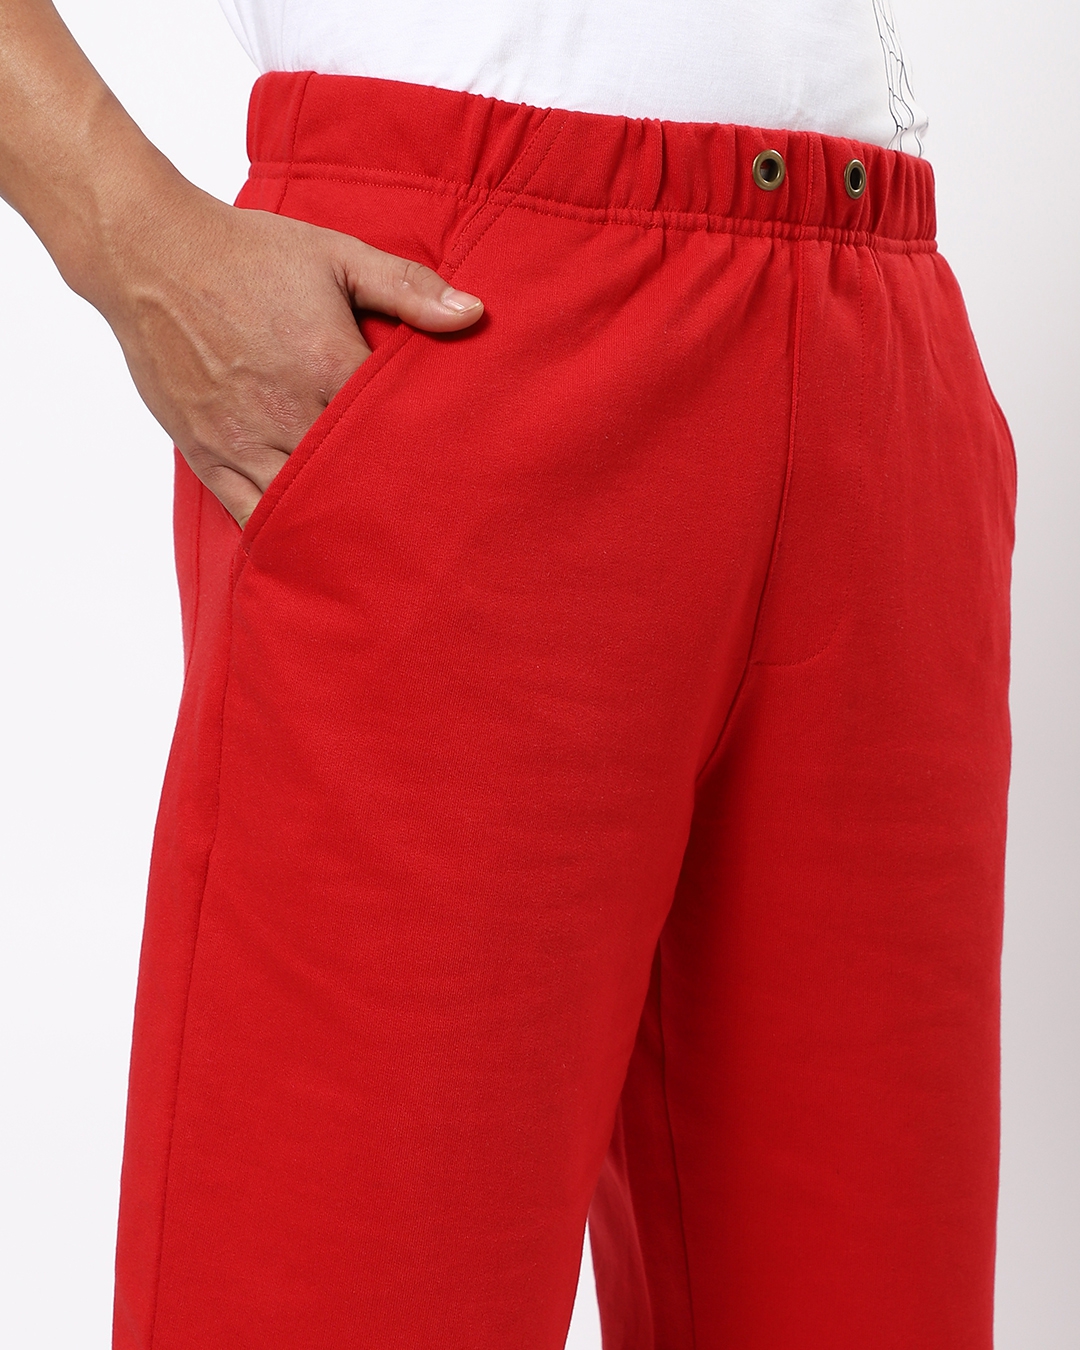 Shop Men's Red Spider Man Printed Shorts